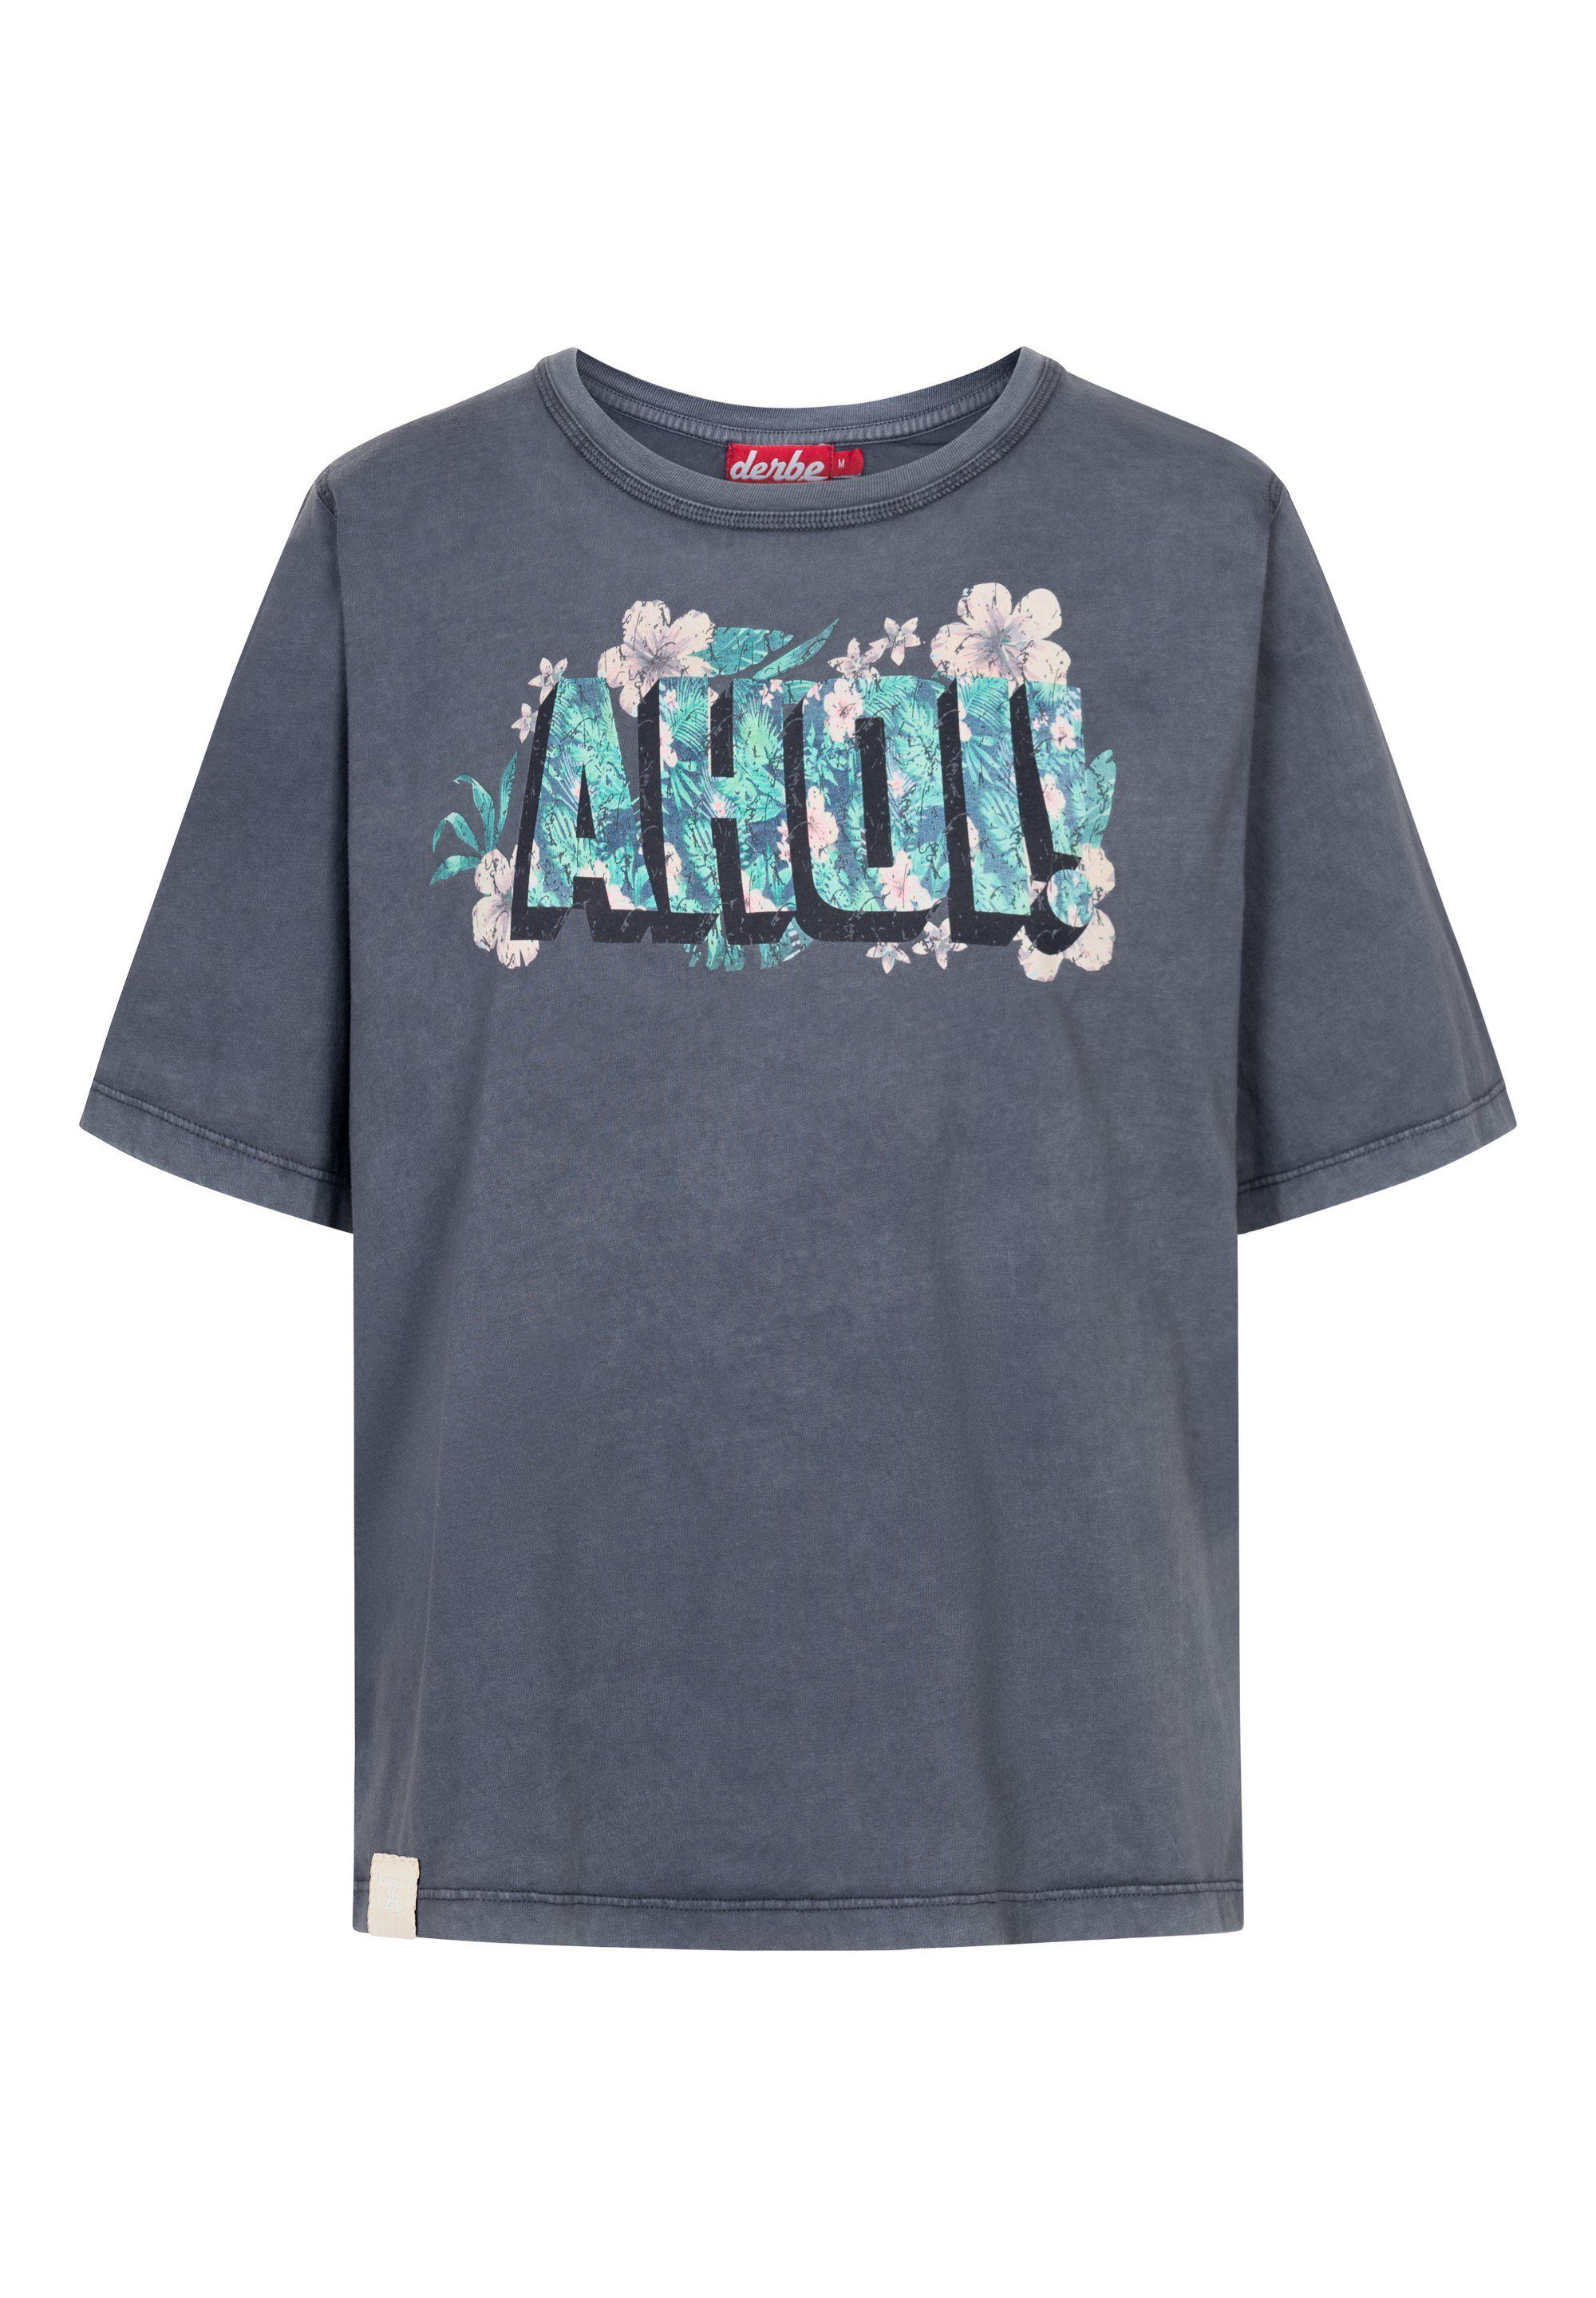 Derbe T-Shirt in Portugal, Blauer Engel Knopf / Fabric, Baumwolle, Made Grüner Hawahoi washed